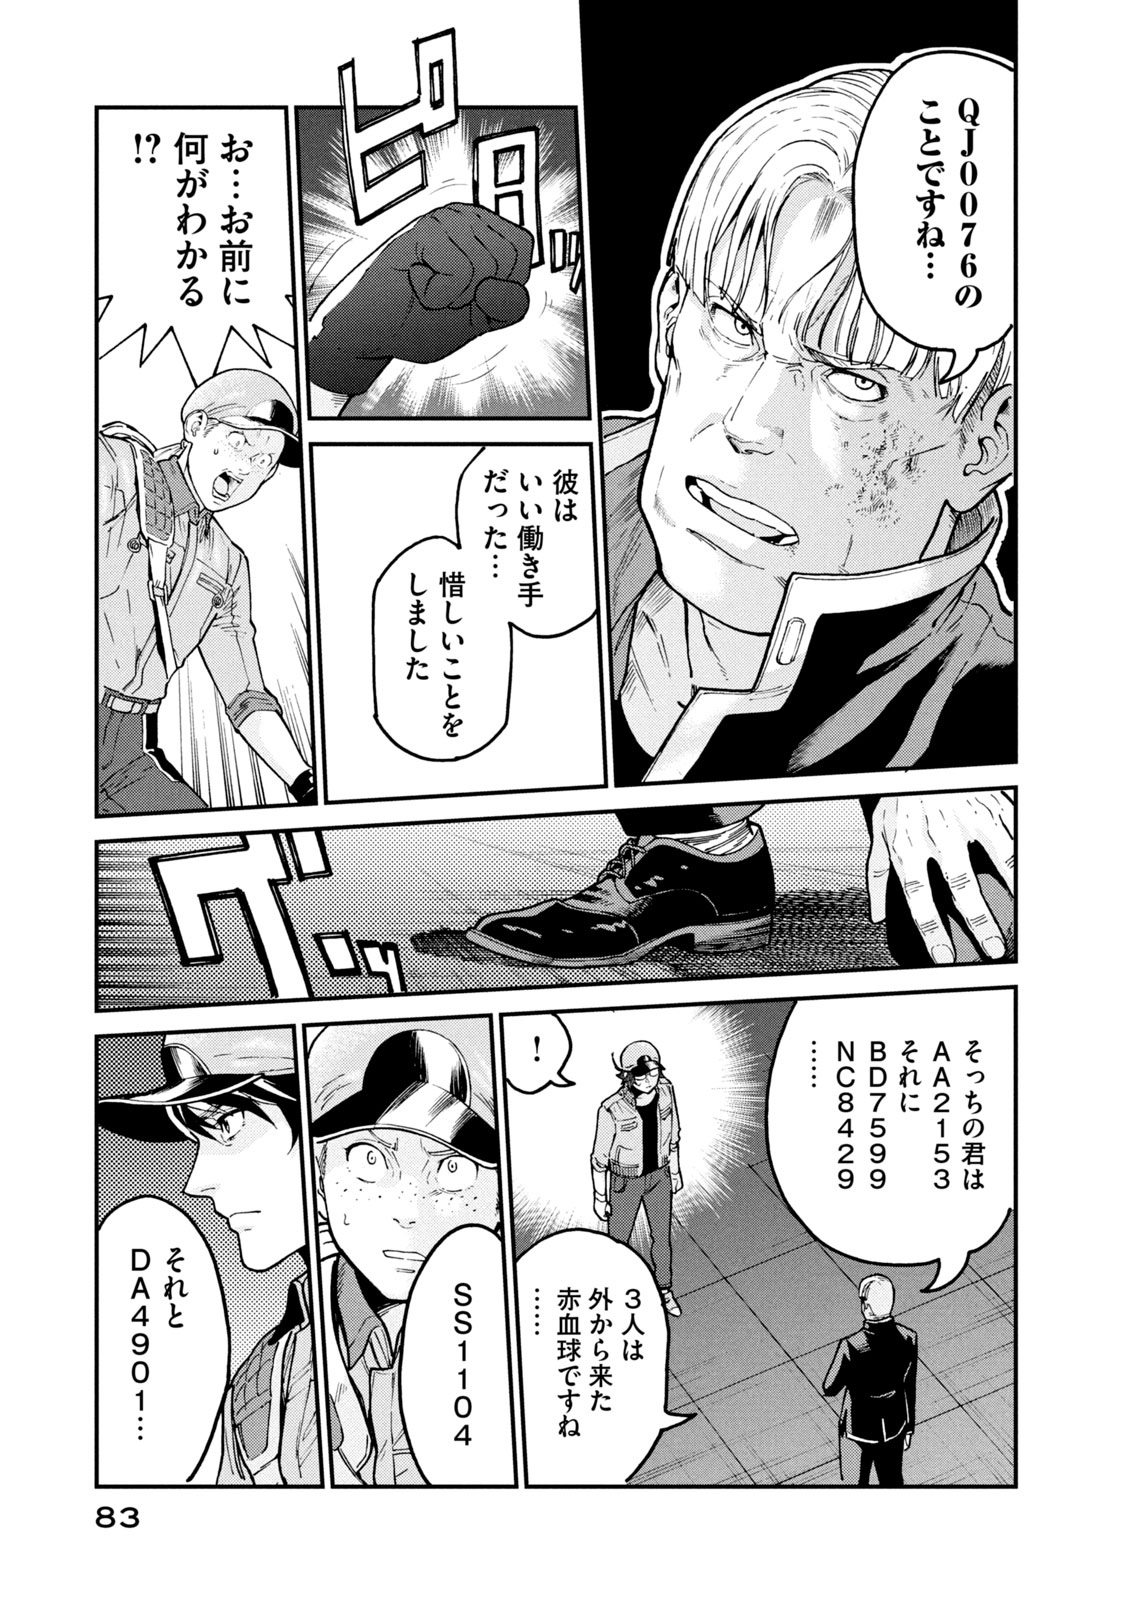 Hataraku Saibou BLACK - Chapter 34 - Page 21